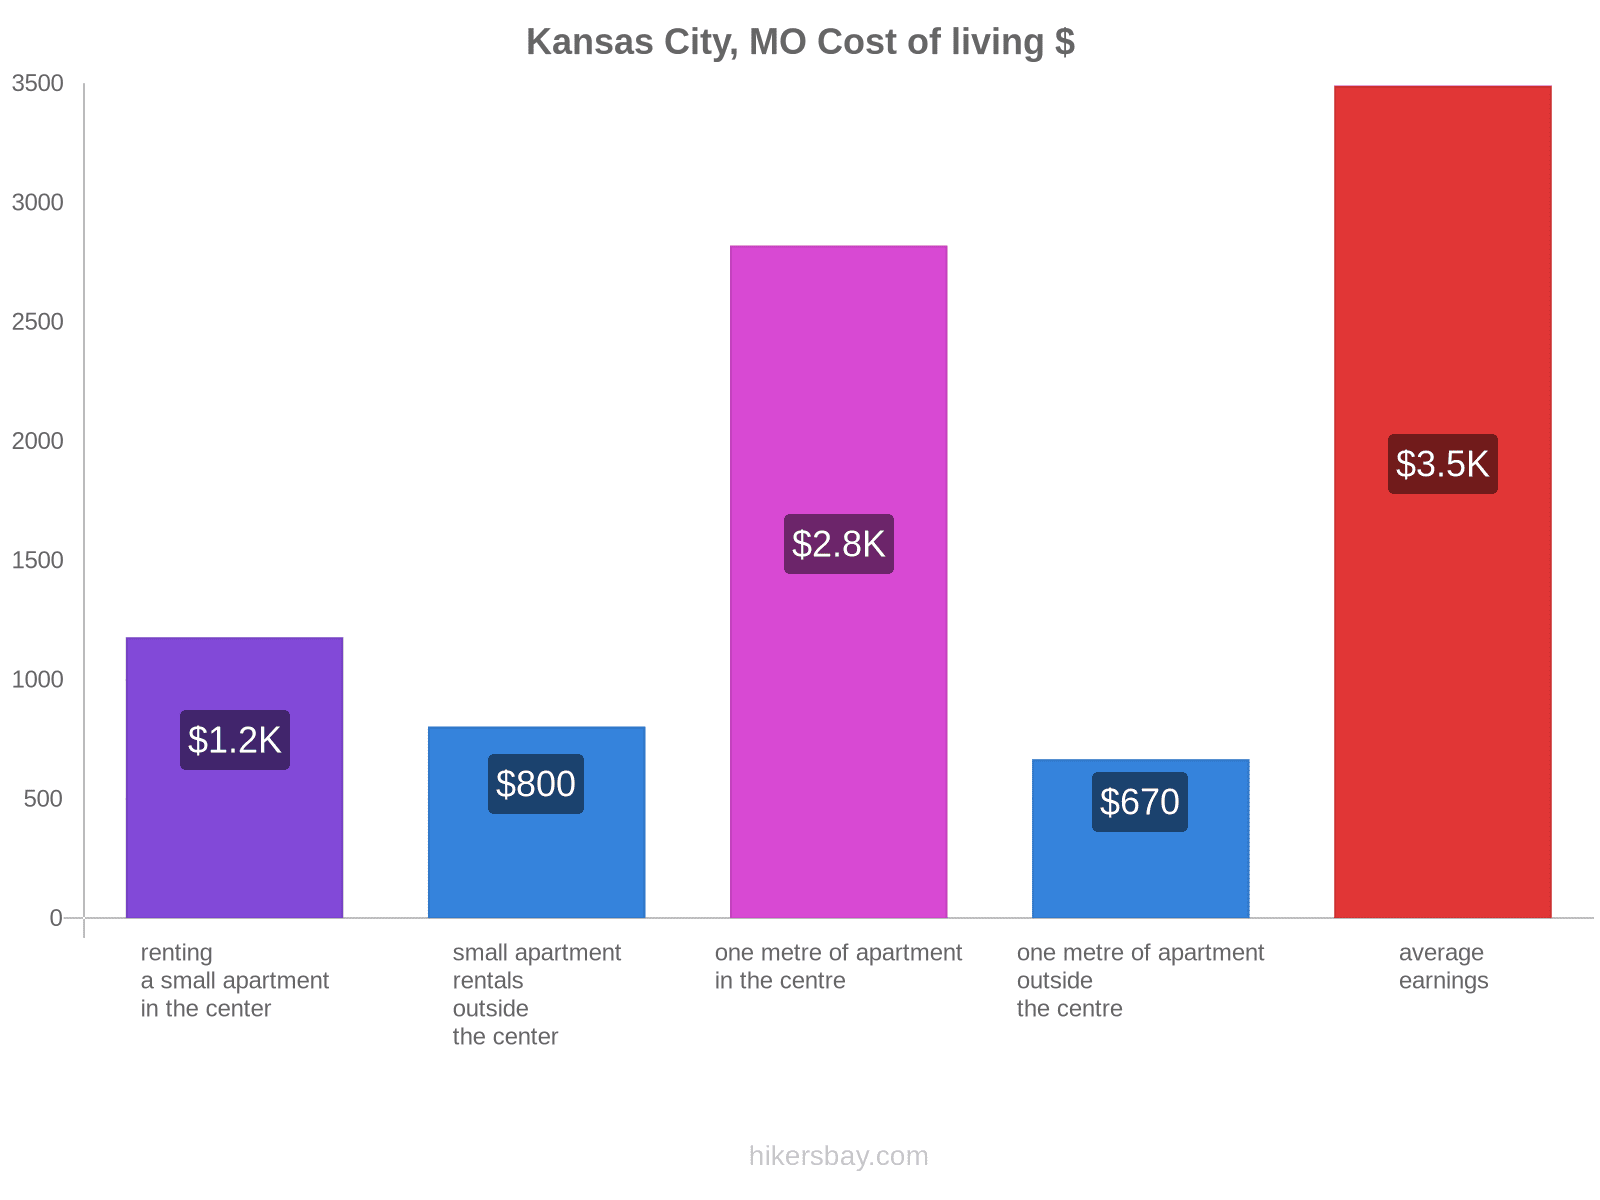 Kansas City, MO cost of living hikersbay.com